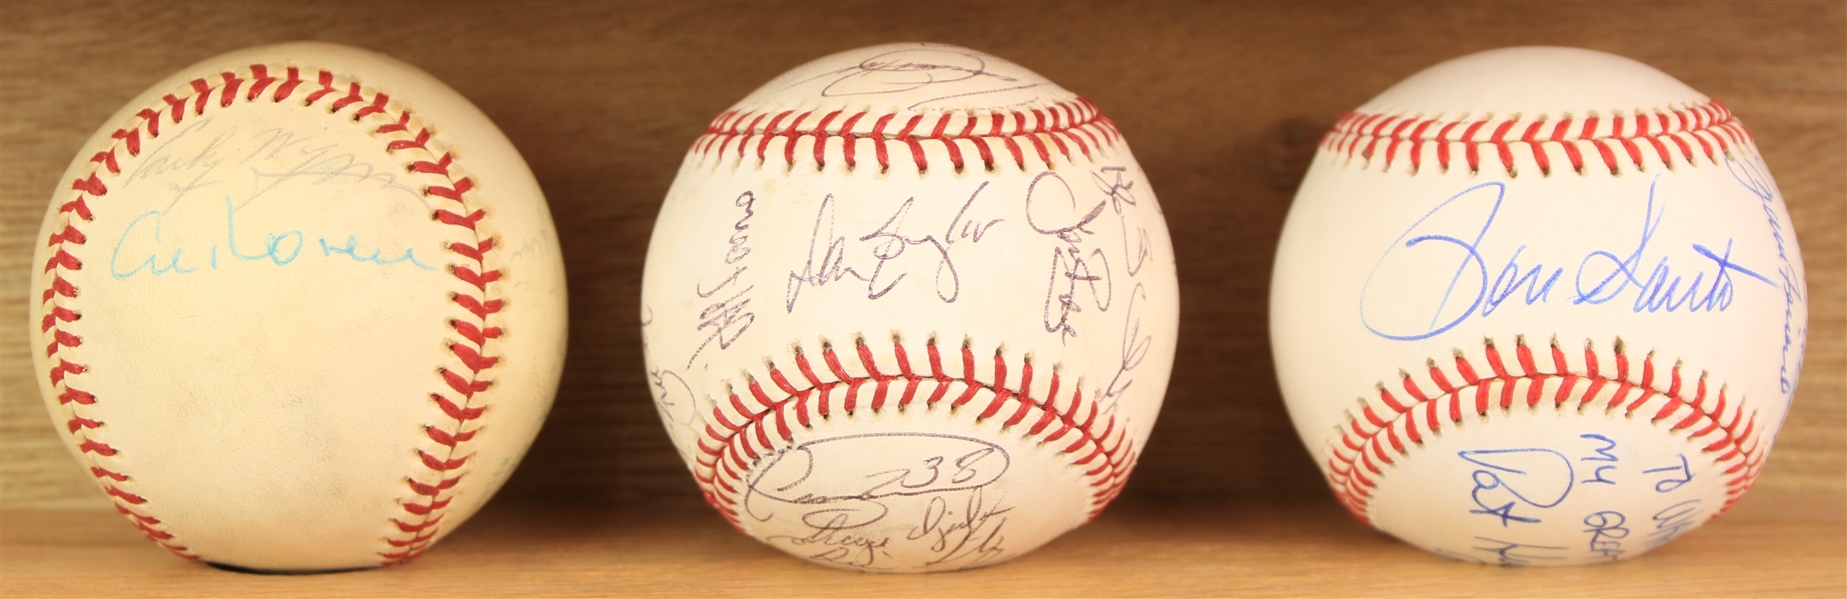 1970s-2000s Multi Signed Baseballs - Lot of 3 w/ Ernie Banks, Ron Santo, Early Wynn & More (JSA)